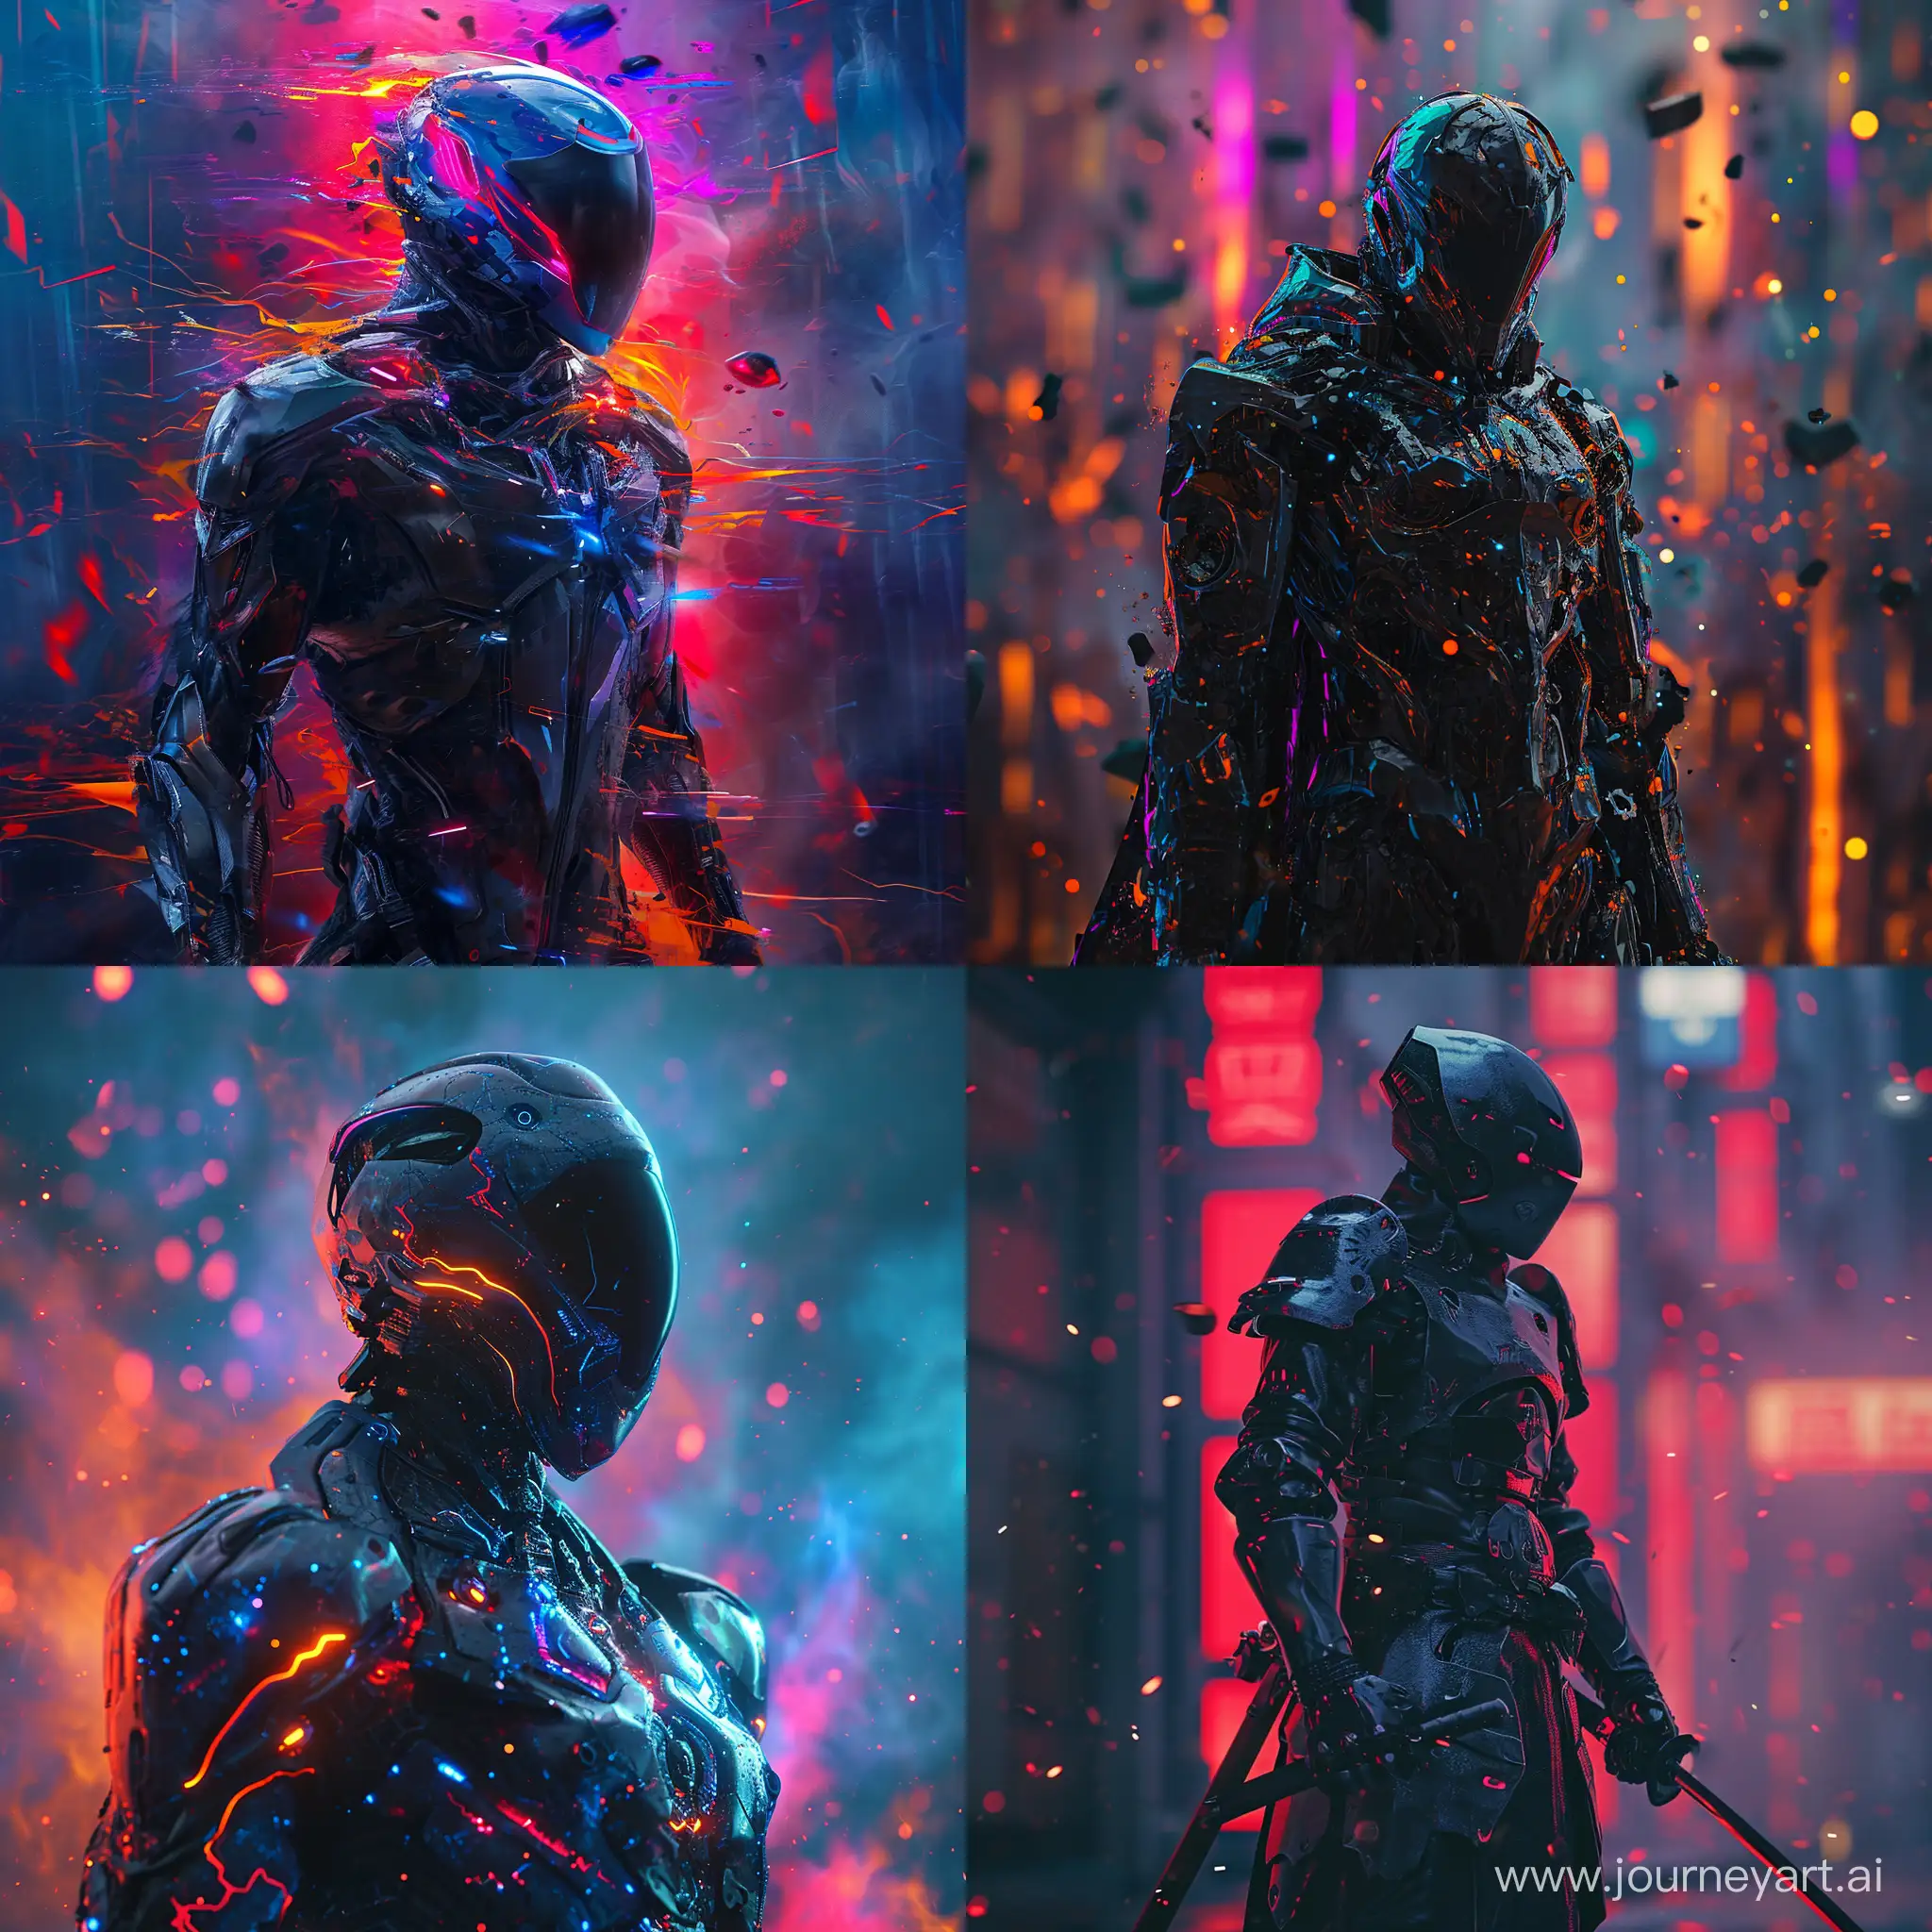 Cybernetic-Black-Knight-in-Unusual-Fantasy-Armor-Futuristic-Cyberpunk-Portrait